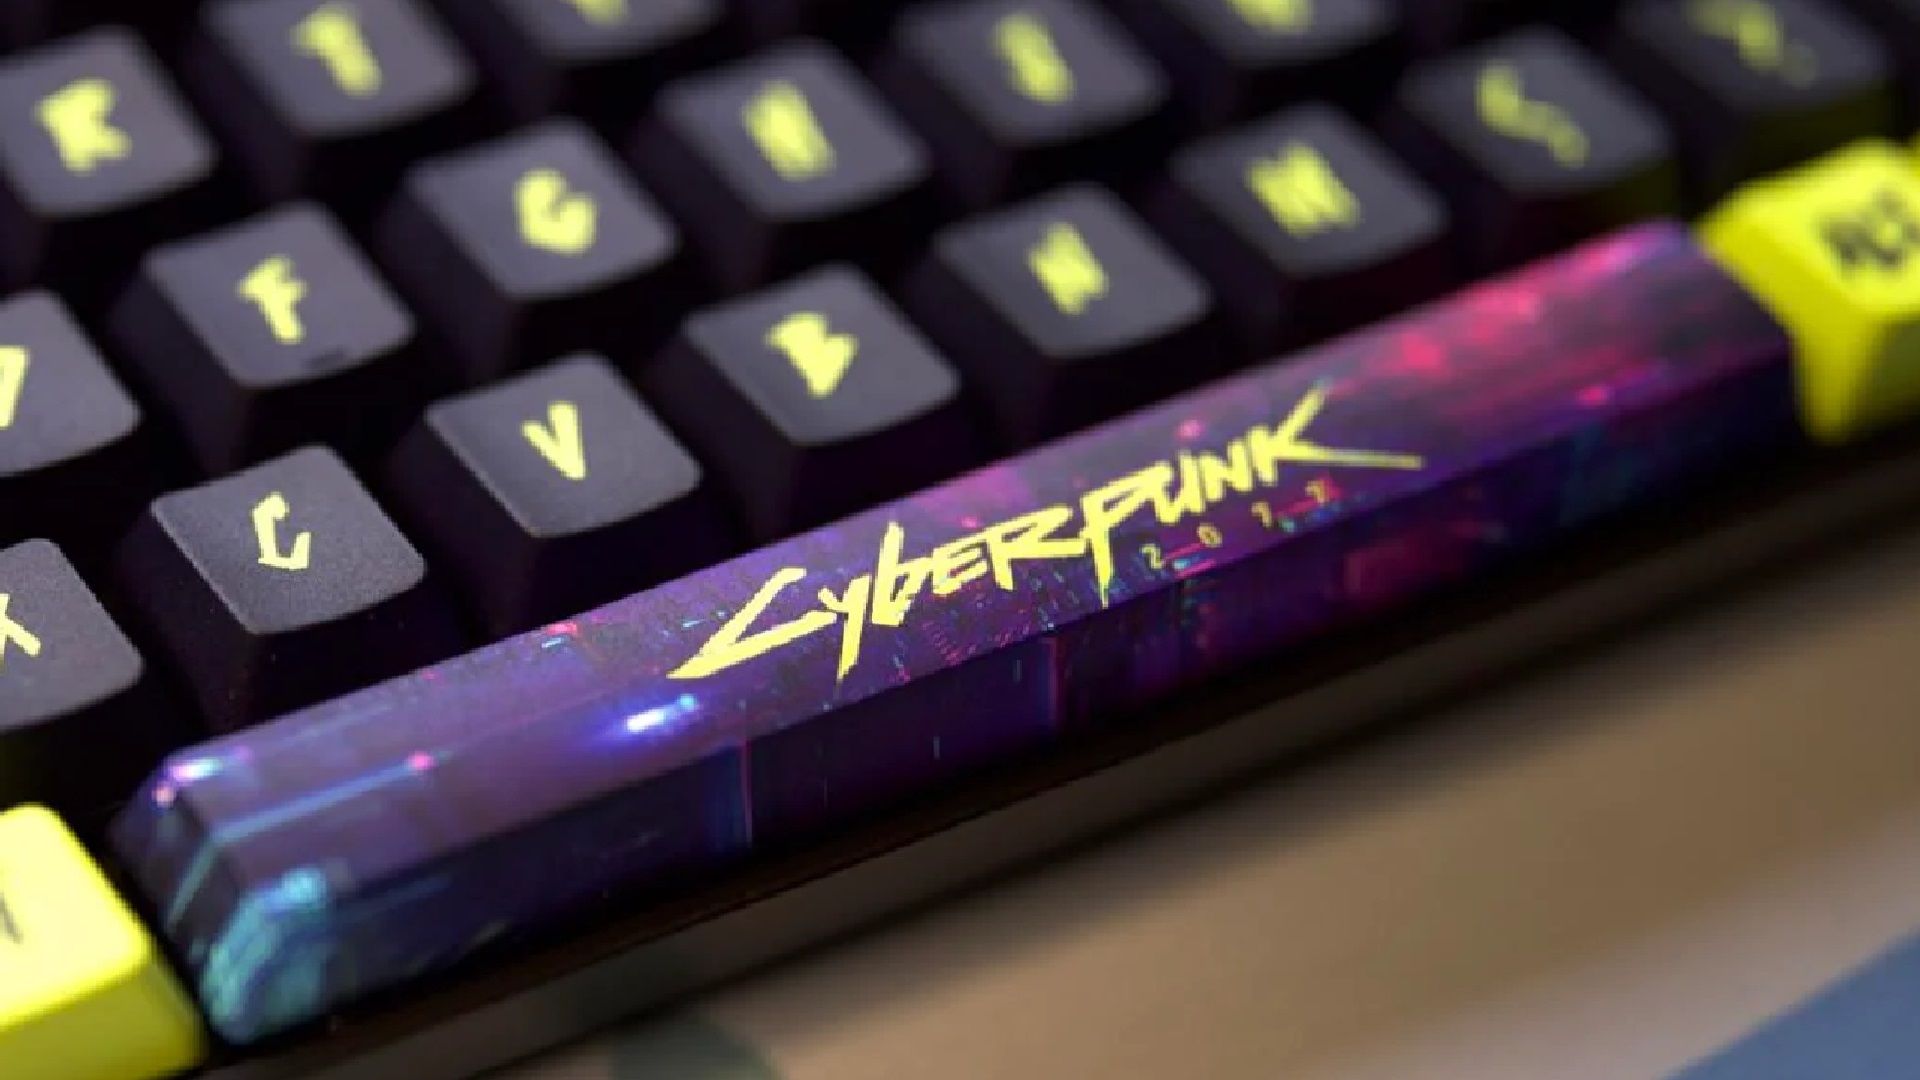 Cyberpunk 2077 Keyboard